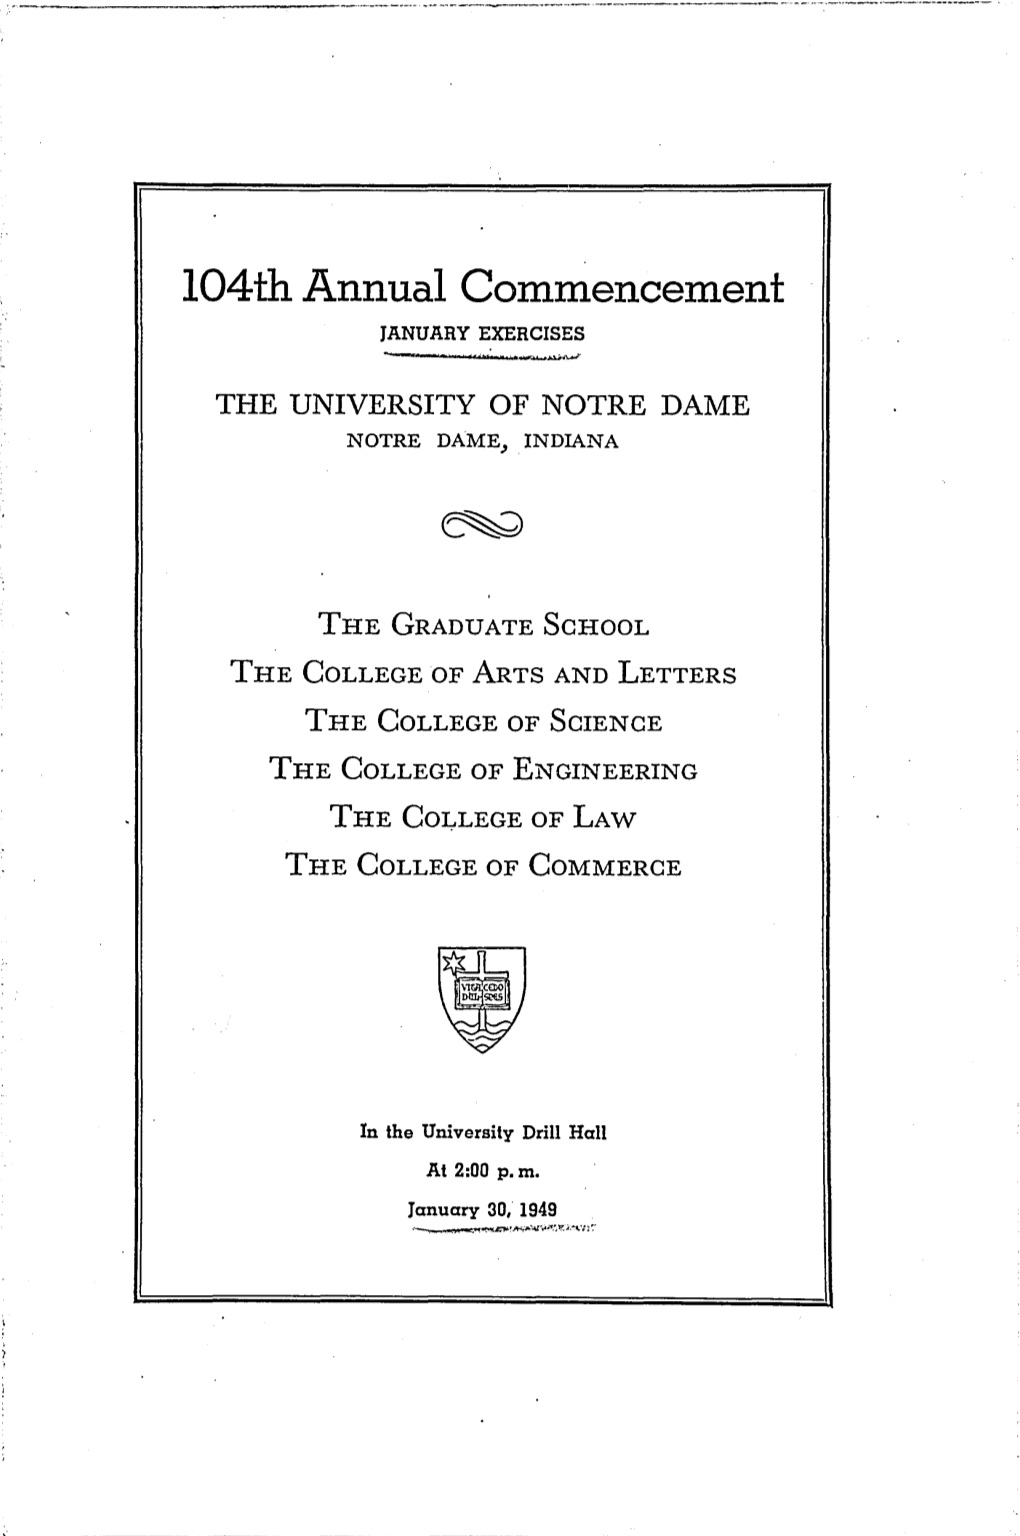 1949-01-30 University of Notre Dame Commencement Program